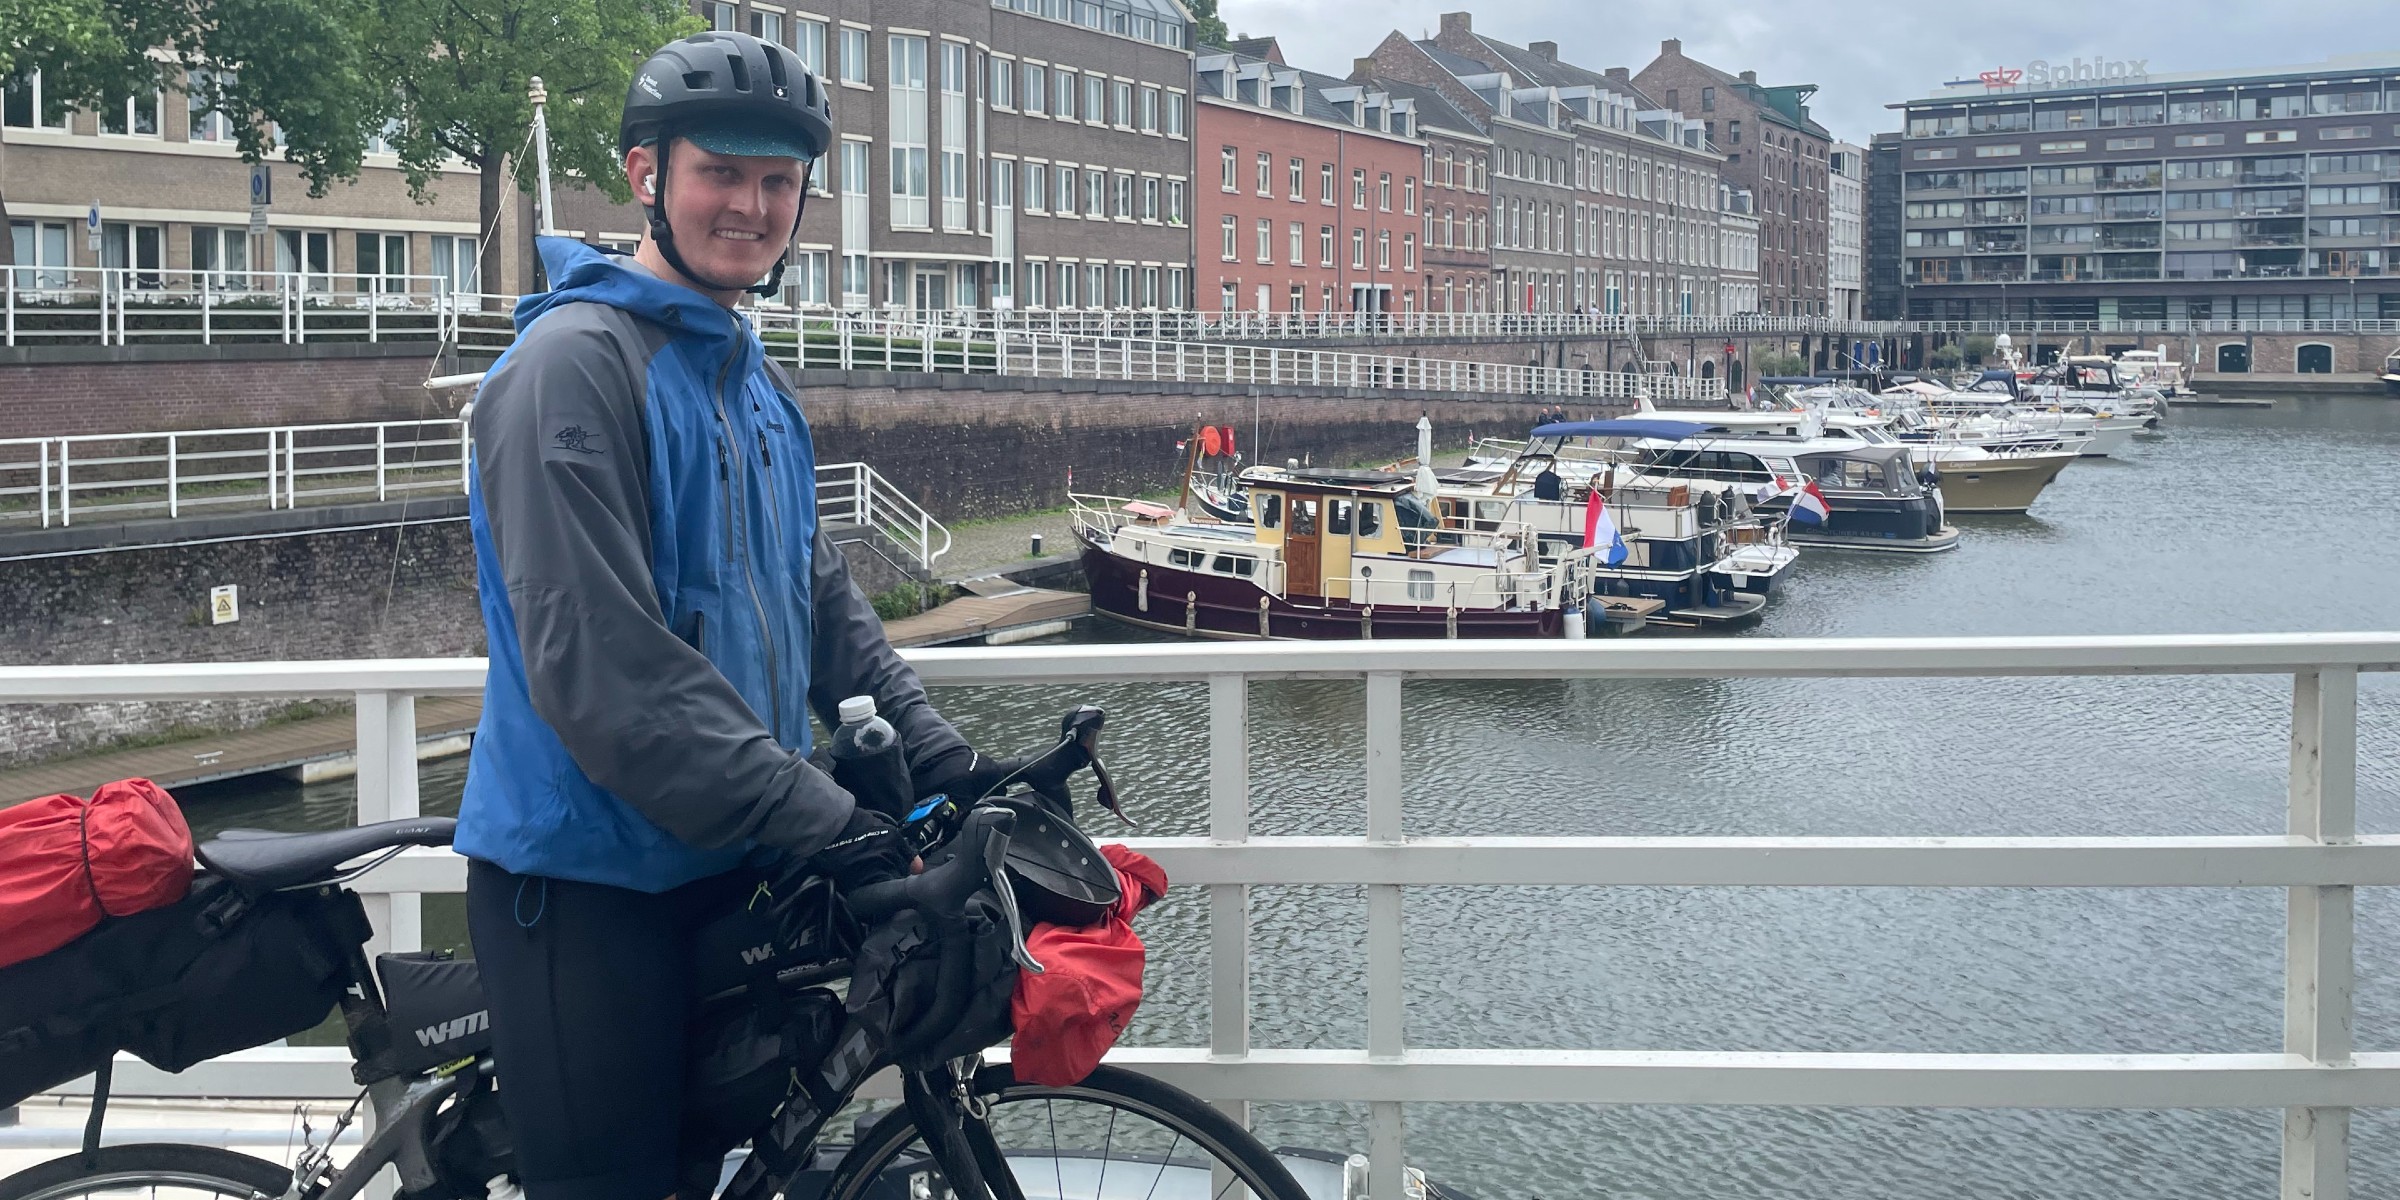 OsloMet-student Åsmund står med sykkelen sin på en bro over en elv i Maastricht i Nederland. Han smiler til kamera.